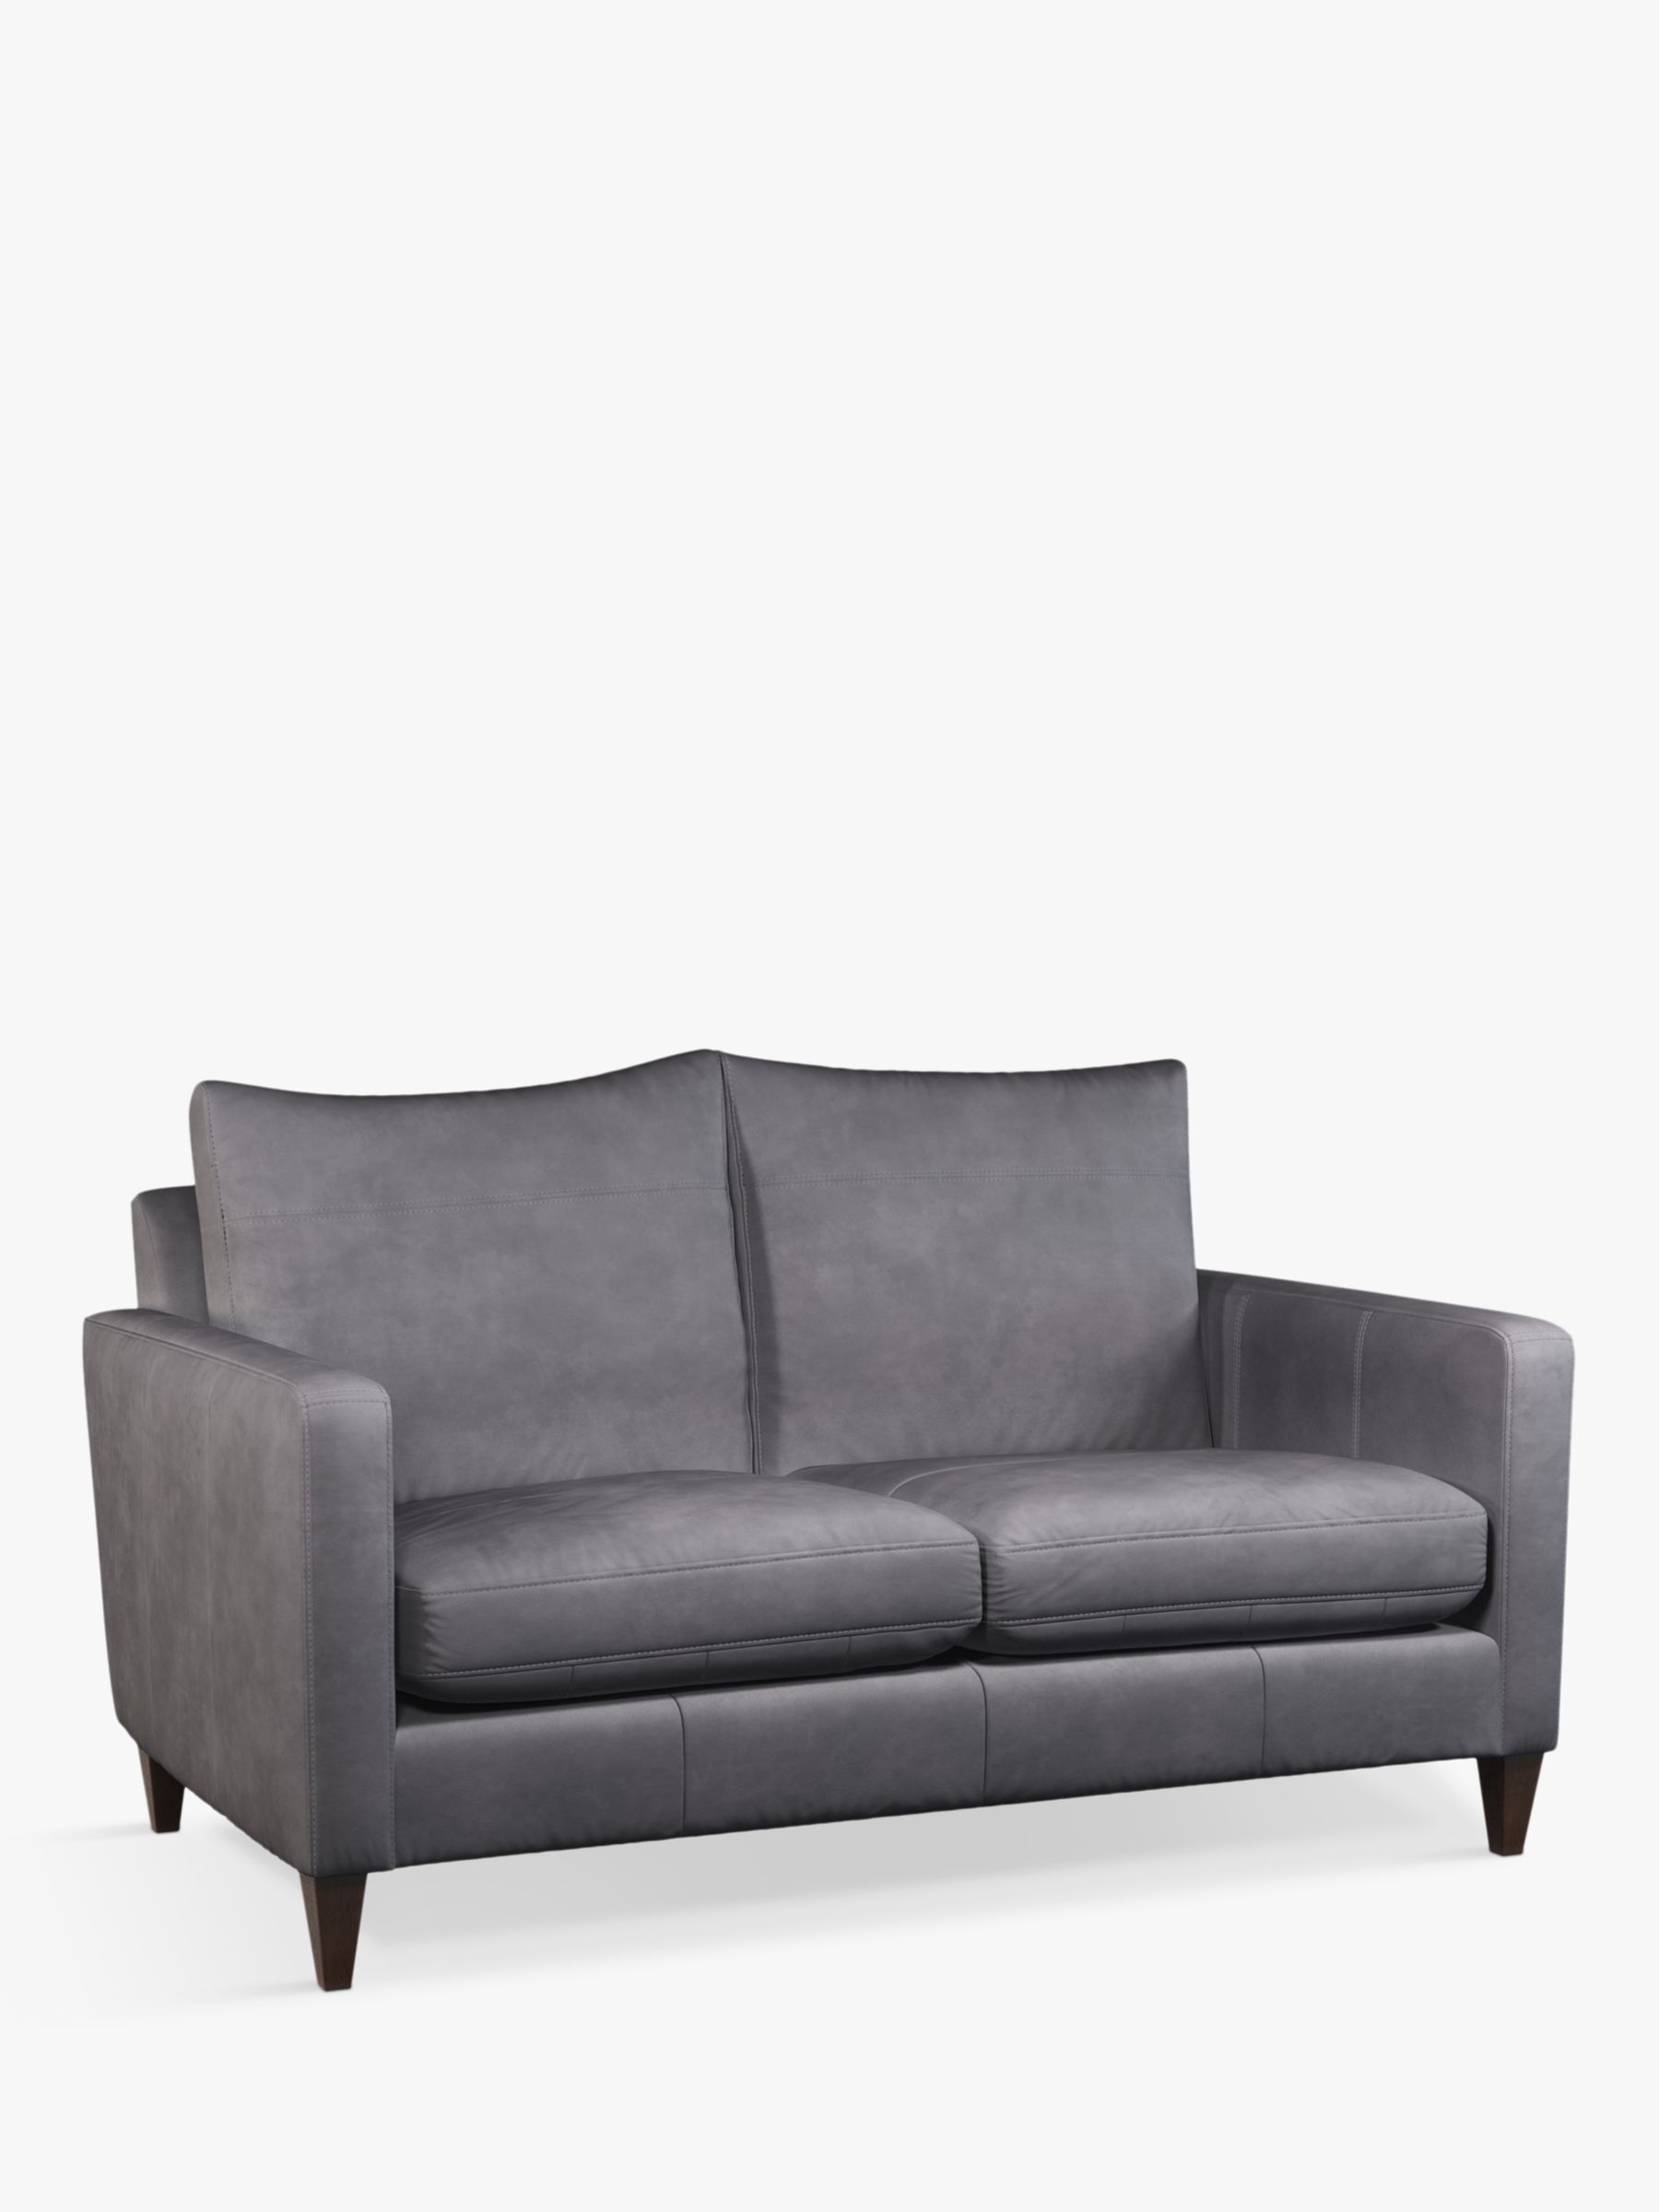 Bailey Range, John Lewis Bailey Small 2 Seater Leather Sofa, Dark Leg, Soft Touch Grey